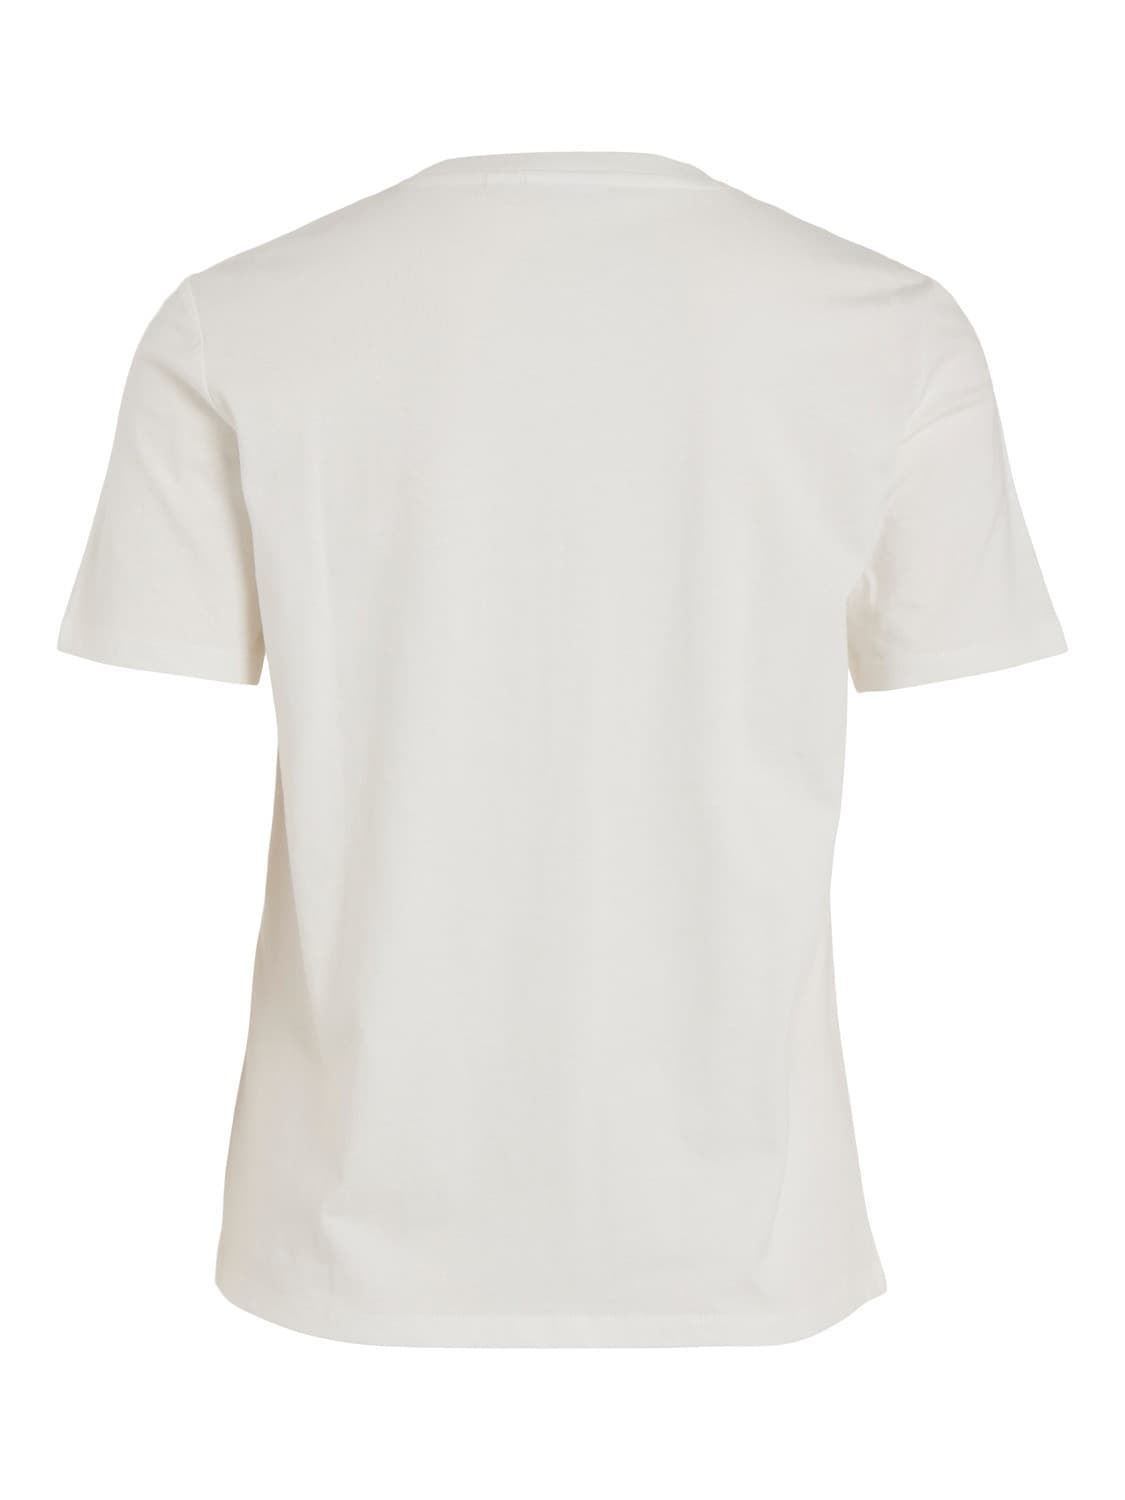 Camiseta blanca Vimatti - Imagen 3